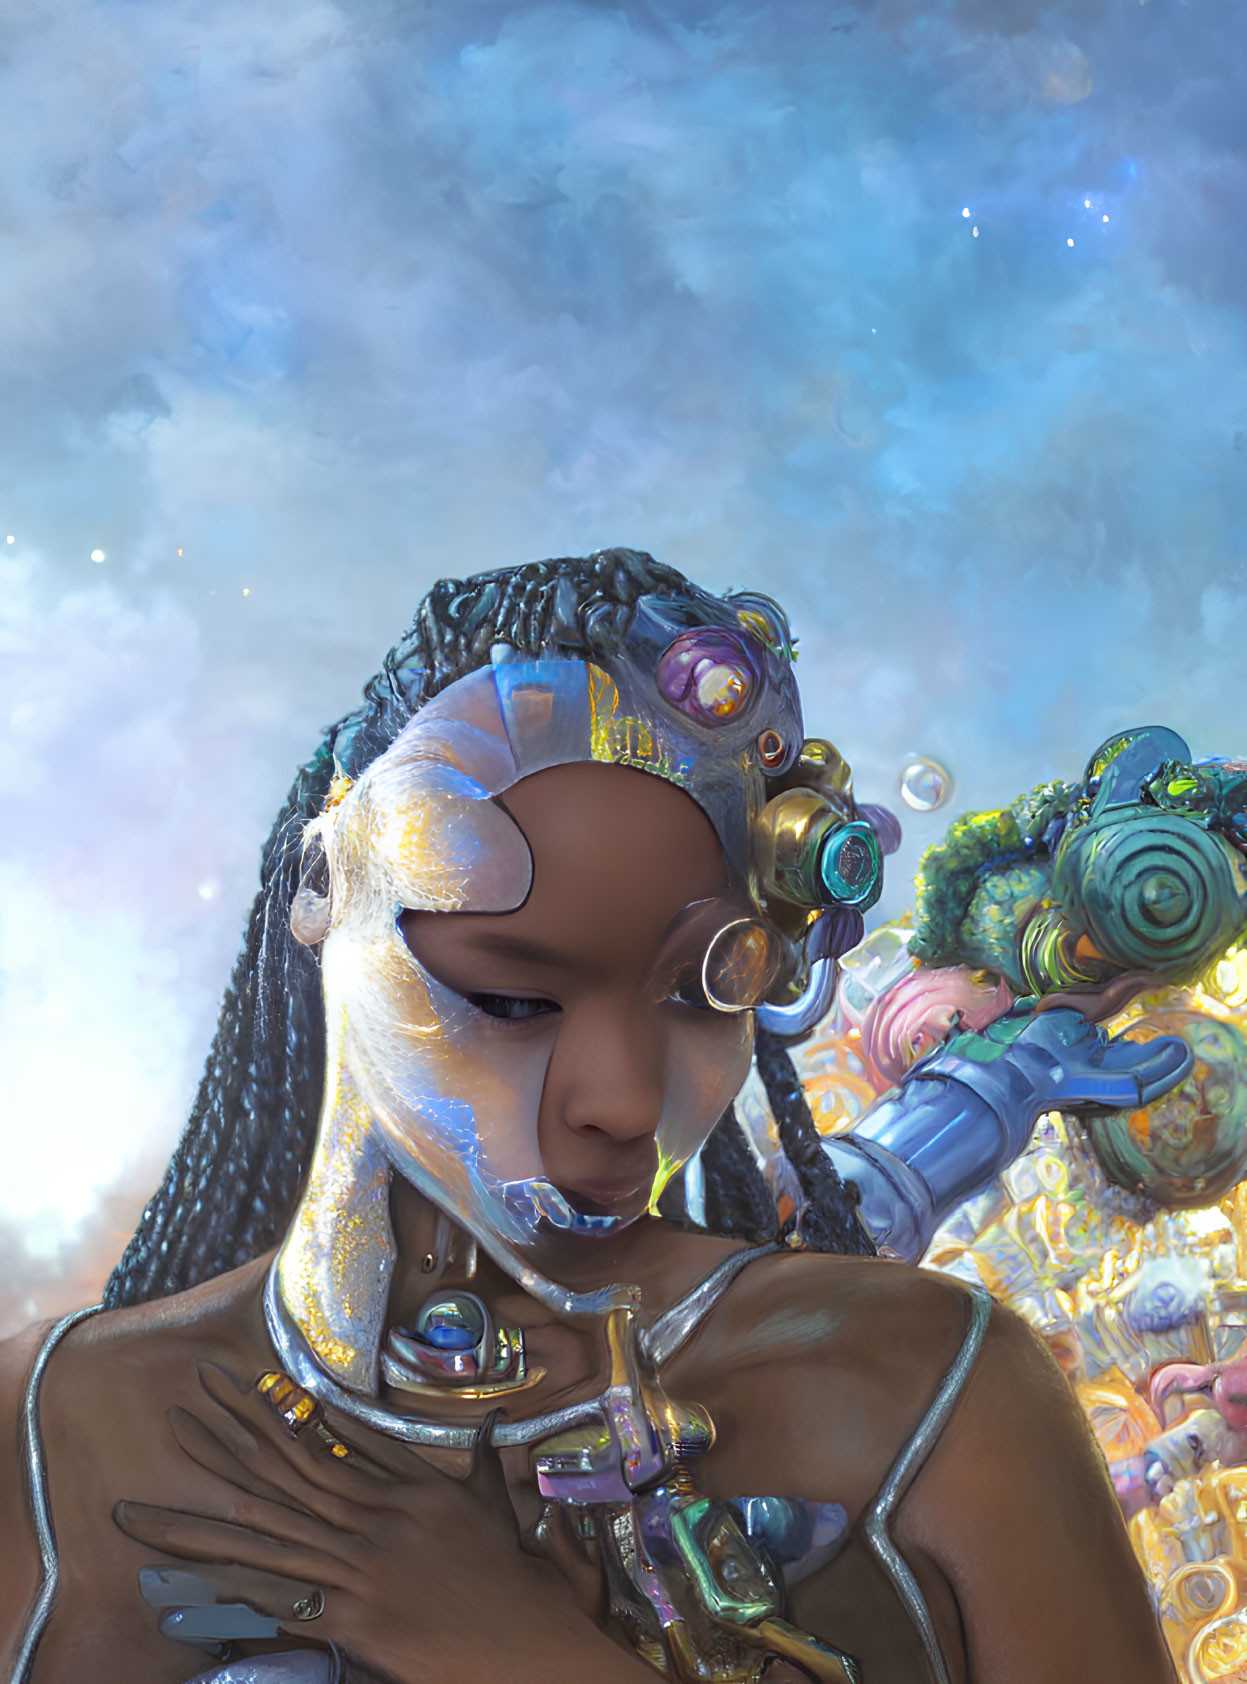 Futuristic female figure with metallic skin and braided hair in cosmic setting